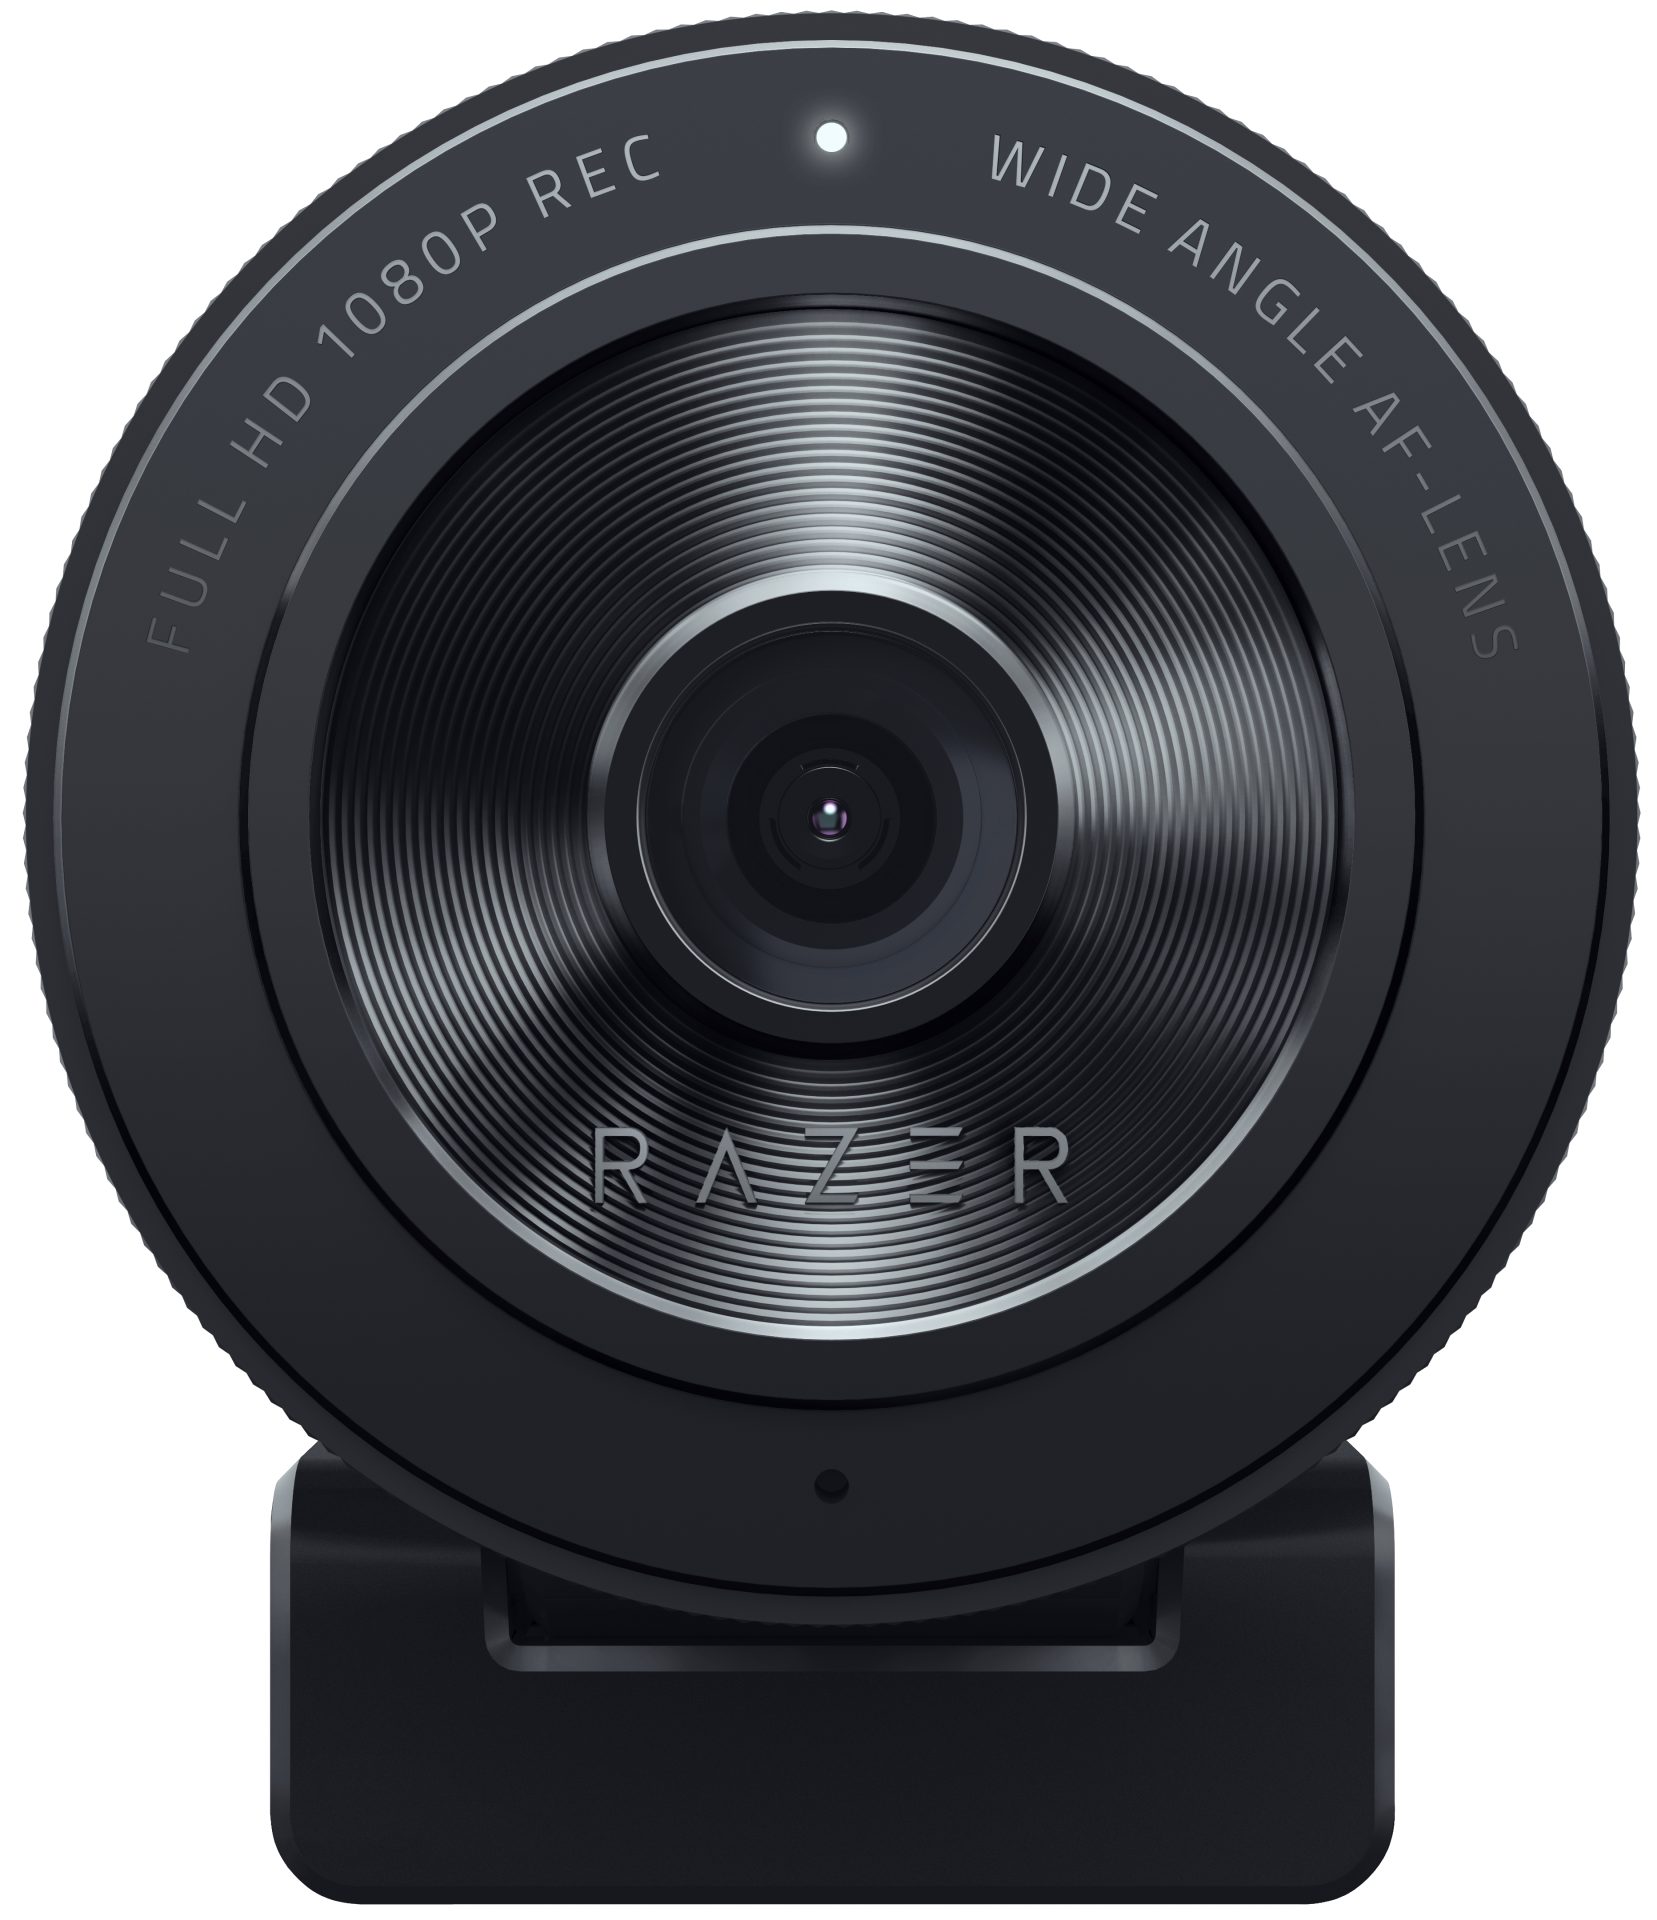 Razer KIYO X - 1080p 30fps/720p 60fps - Full HD - Auto Focus - Low Light Sensor - USB Webcam - Razer 1.28.80.24.010